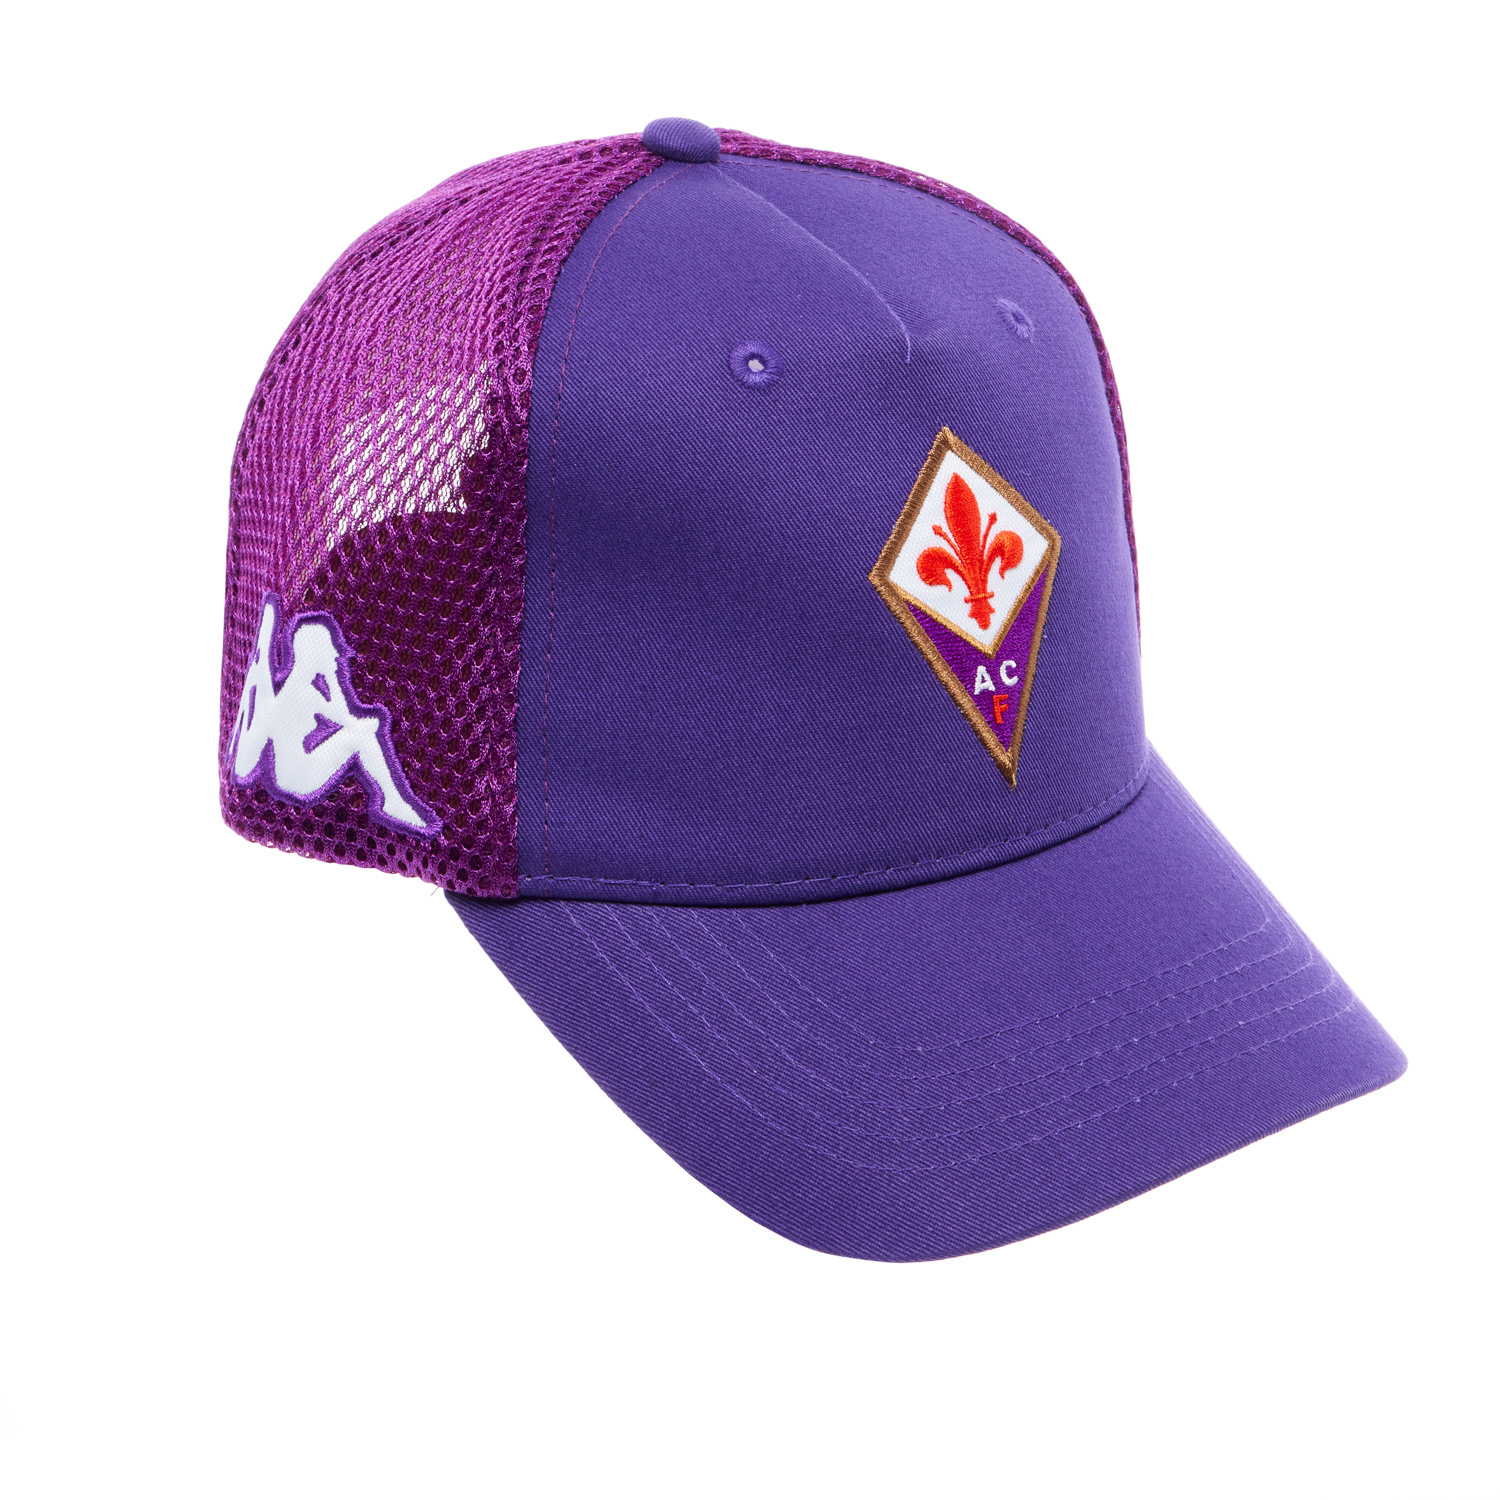 2020-21 Fiorentina Kappa Cap - NEW - 59